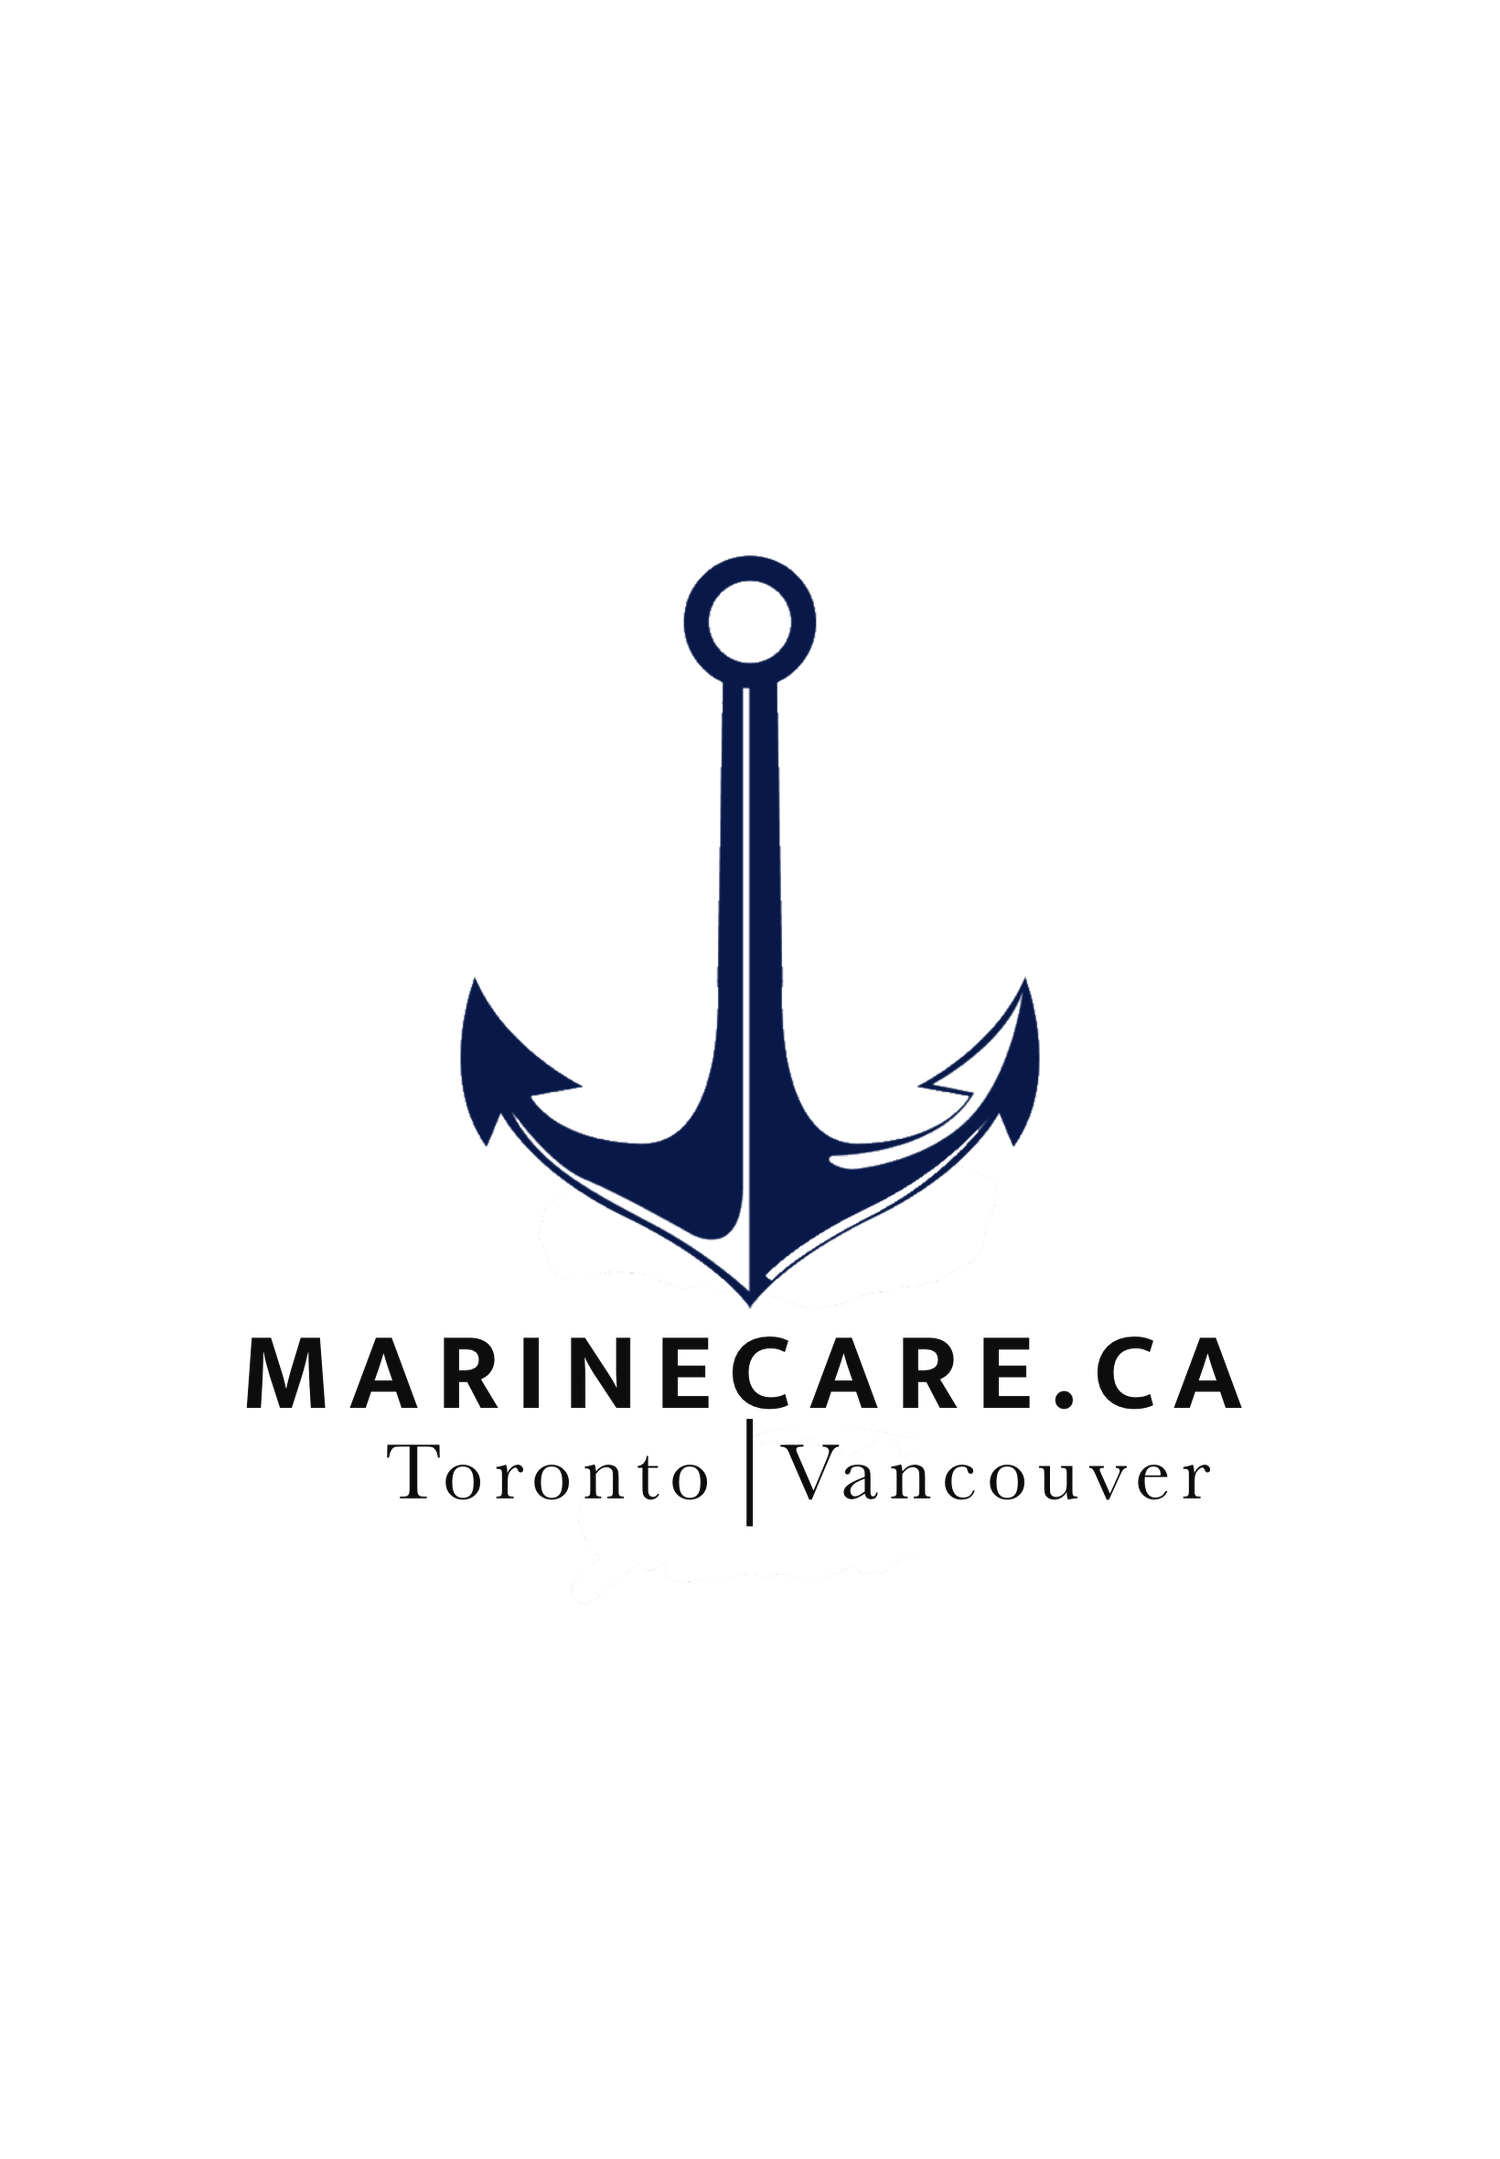 Marinecare.ca